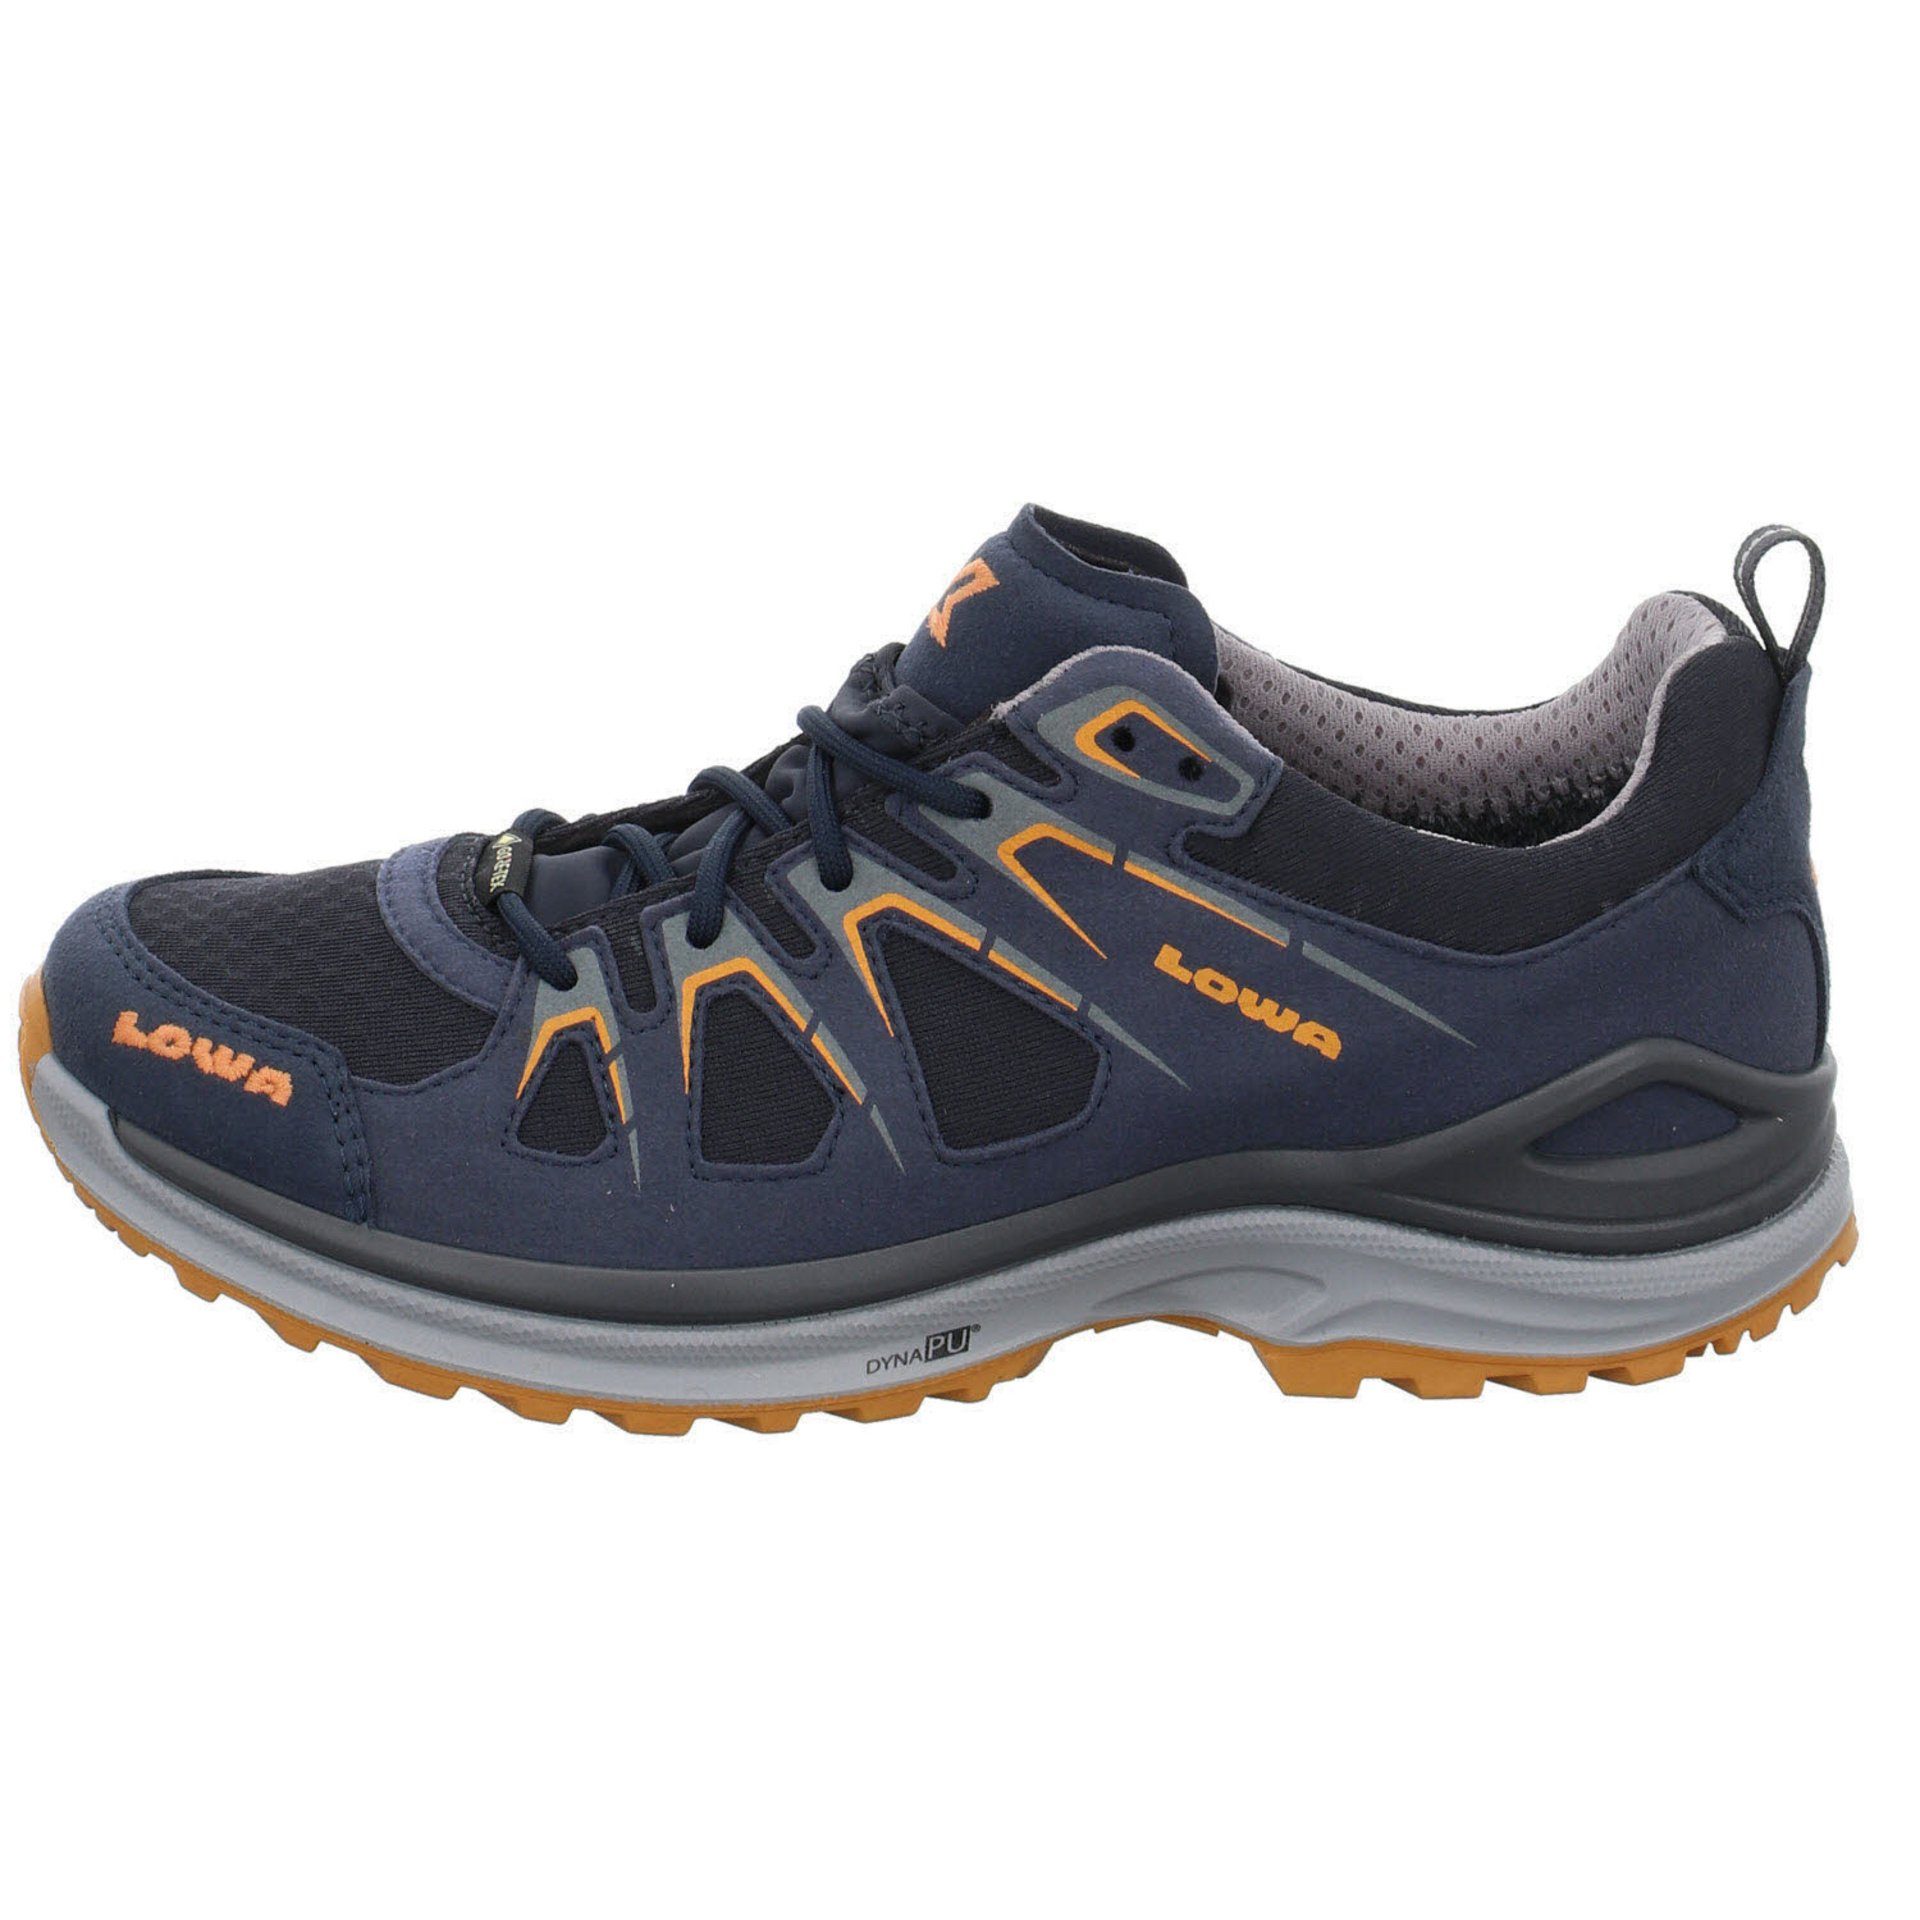 Innox stahlblau/marine Schuhe Outdoorschuh Synthetikkombination Outdoorschuh Damen Outdoor Lowa EVO Lo